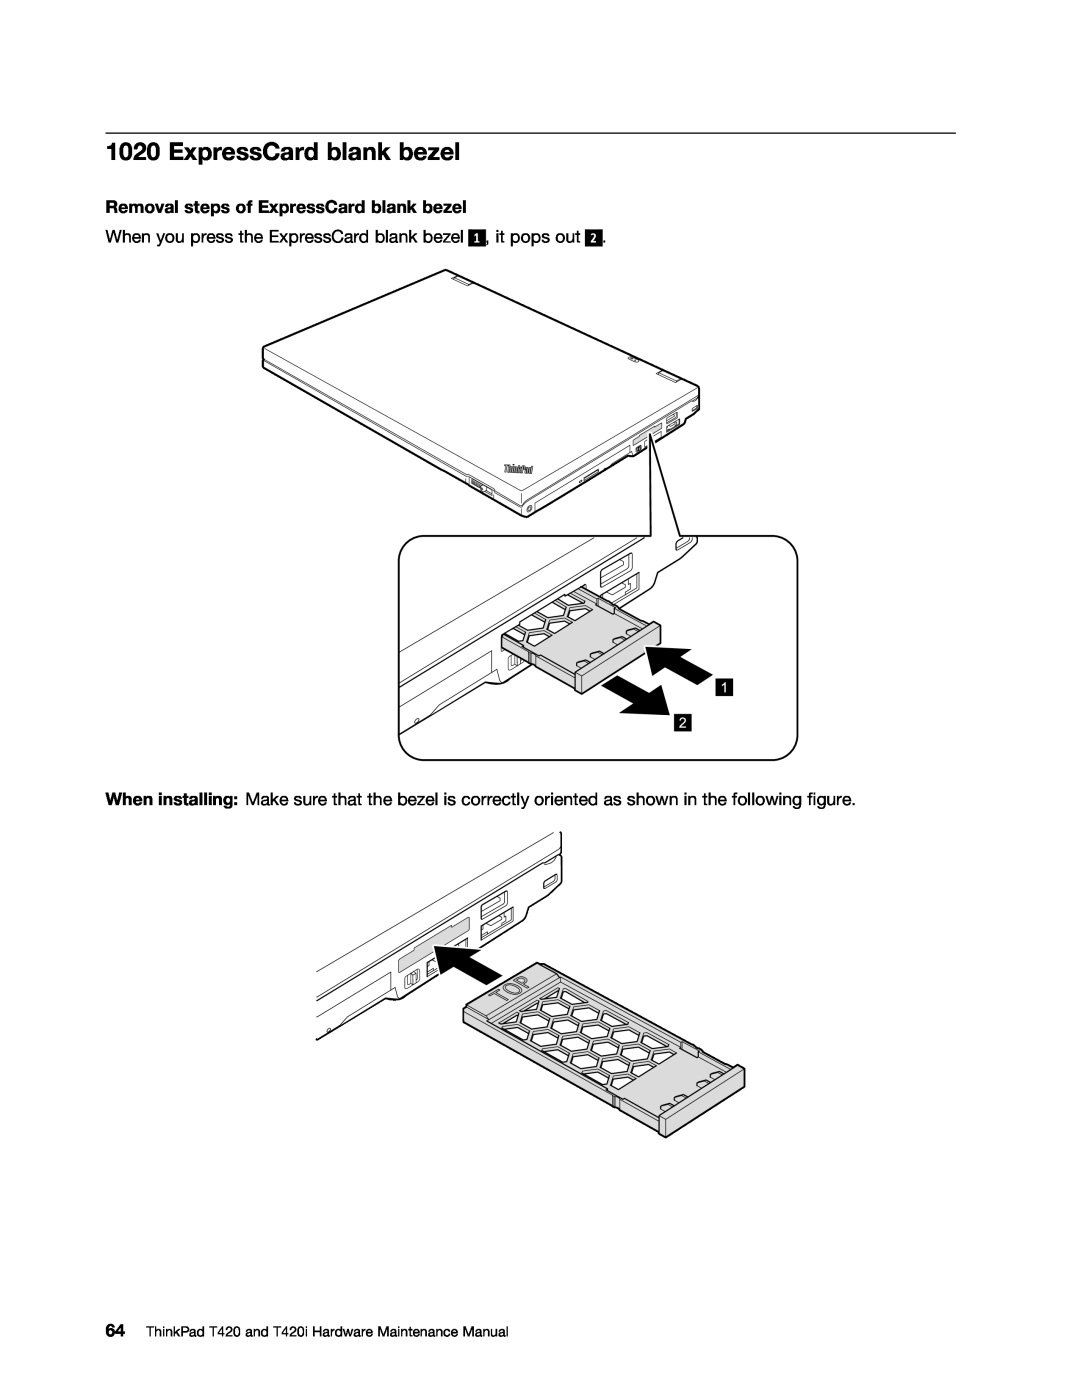 Lenovo T420i manual Removal steps of ExpressCard blank bezel 